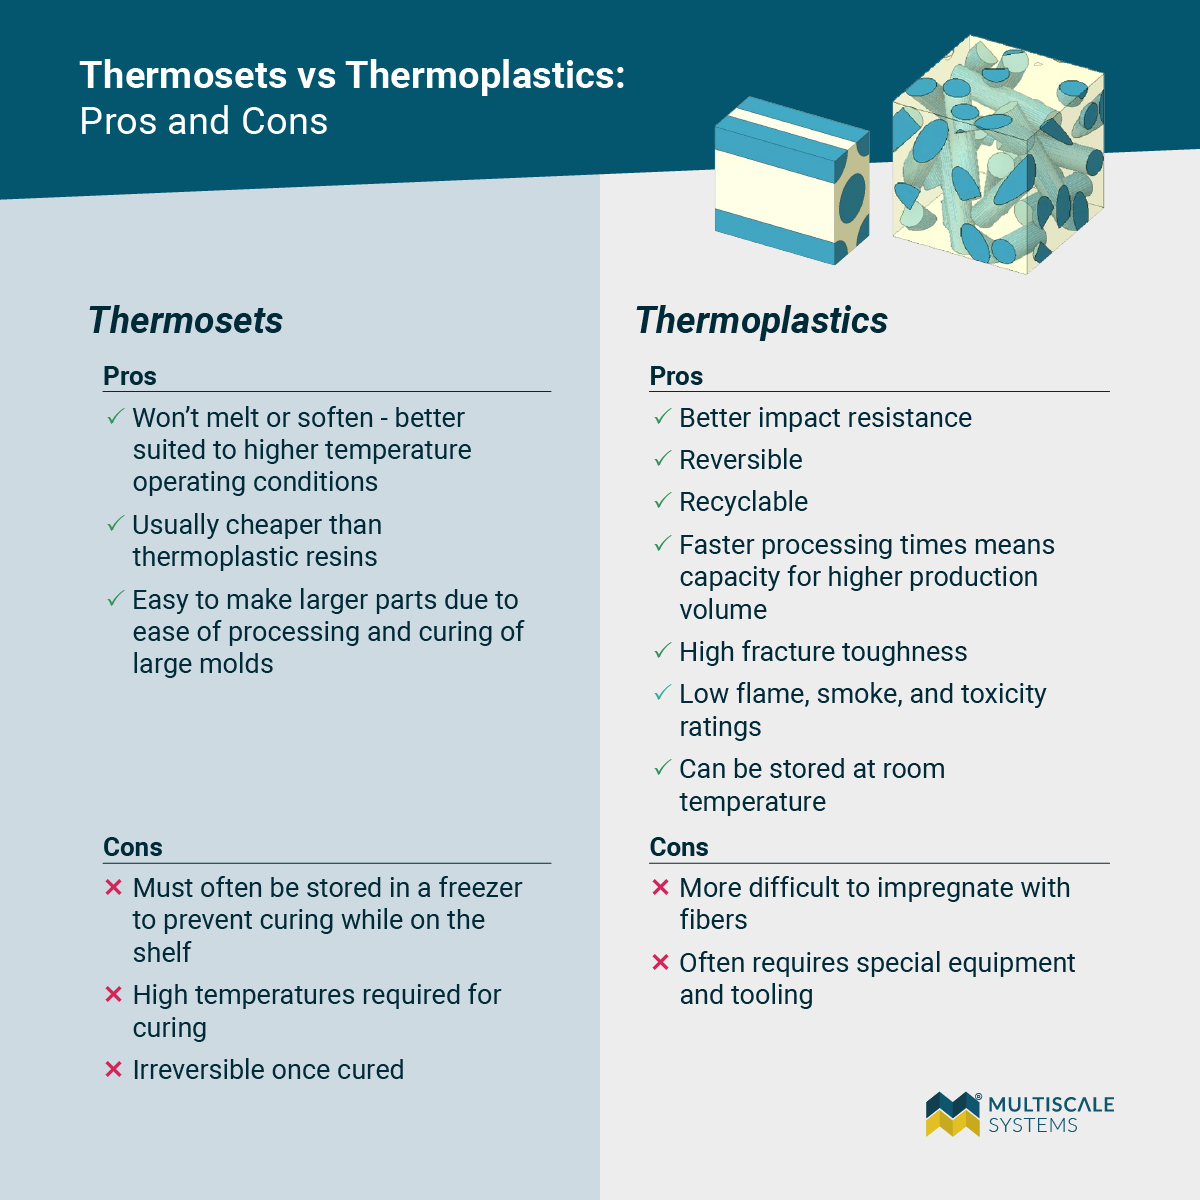 Comparisons of Common Thermoplastics to Hapco Products